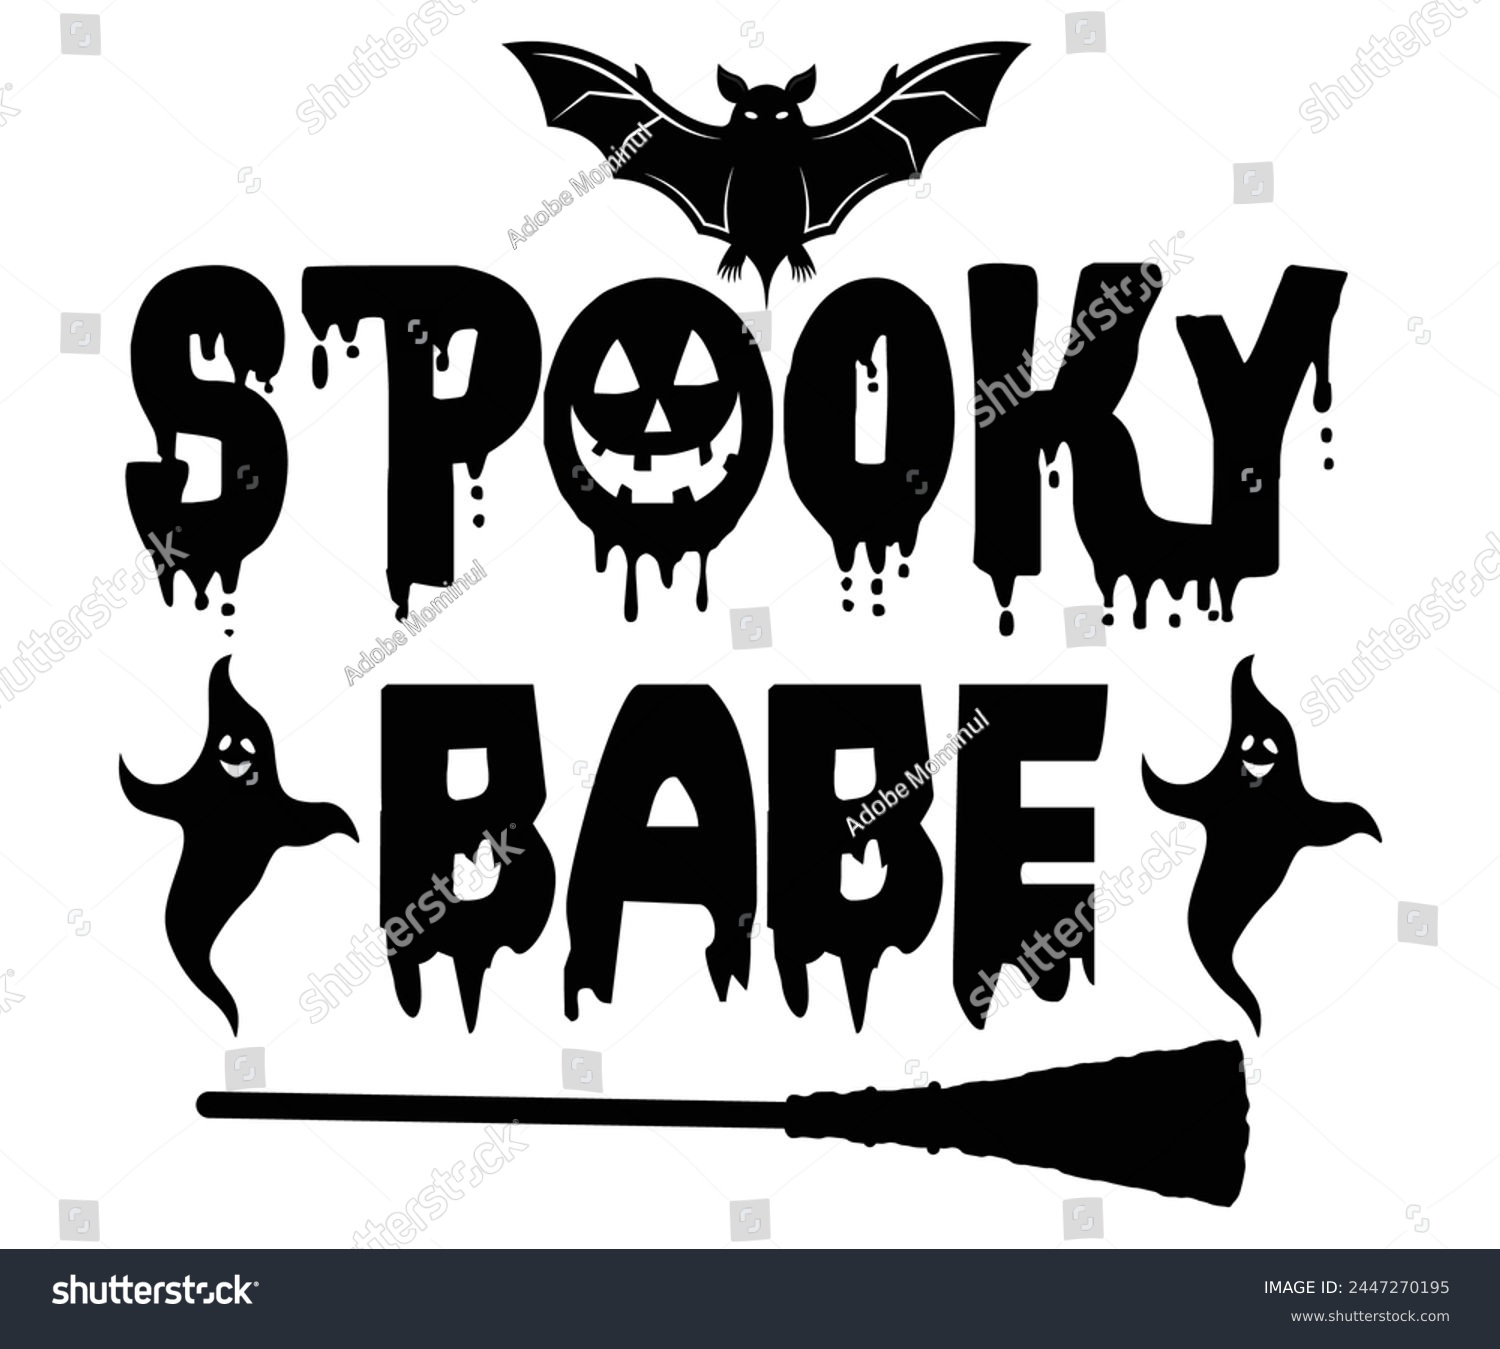 SVG of Spooky Babe Svg,Halloween Svg,Typography,Halloween Quotes,Witches Svg,Halloween Party,Halloween Costume,Halloween Gift,Funny Halloween,Spooky Svg,Funny T shirt,Ghost Svg,Cut file svg